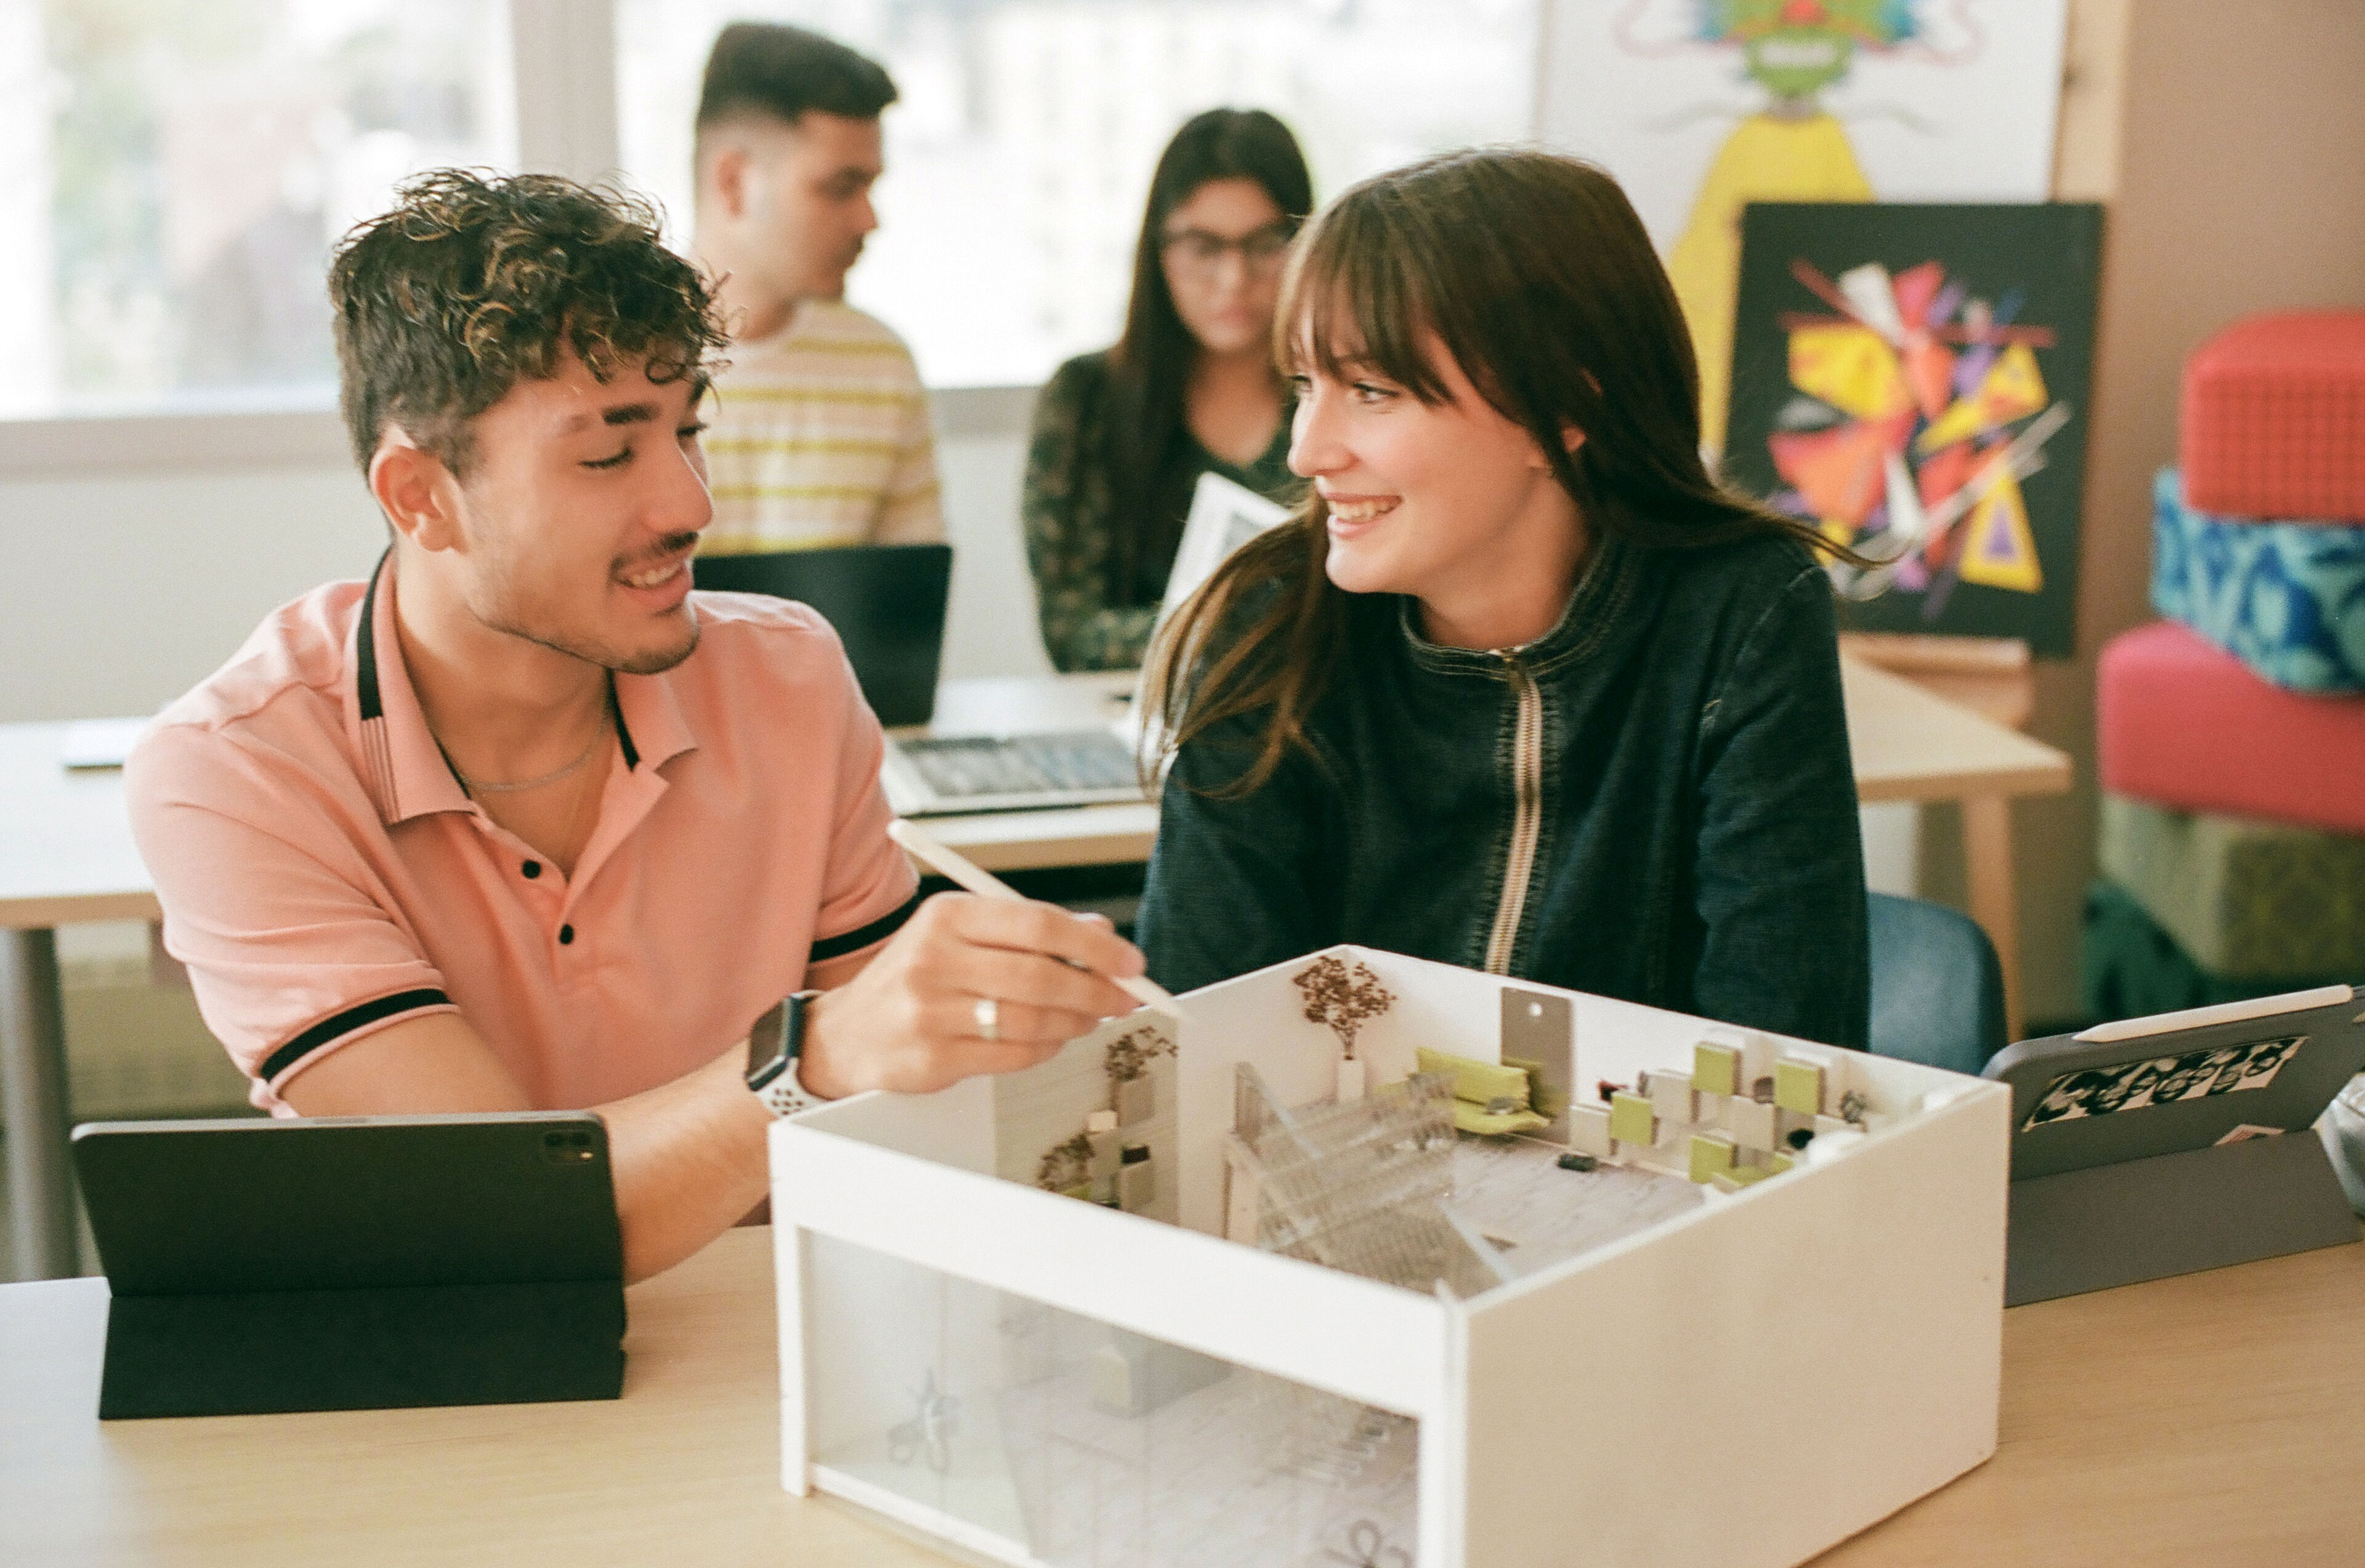 Dos estudiantes se ríen mientras examinan un modelo arquitectónico detallado en un aula.